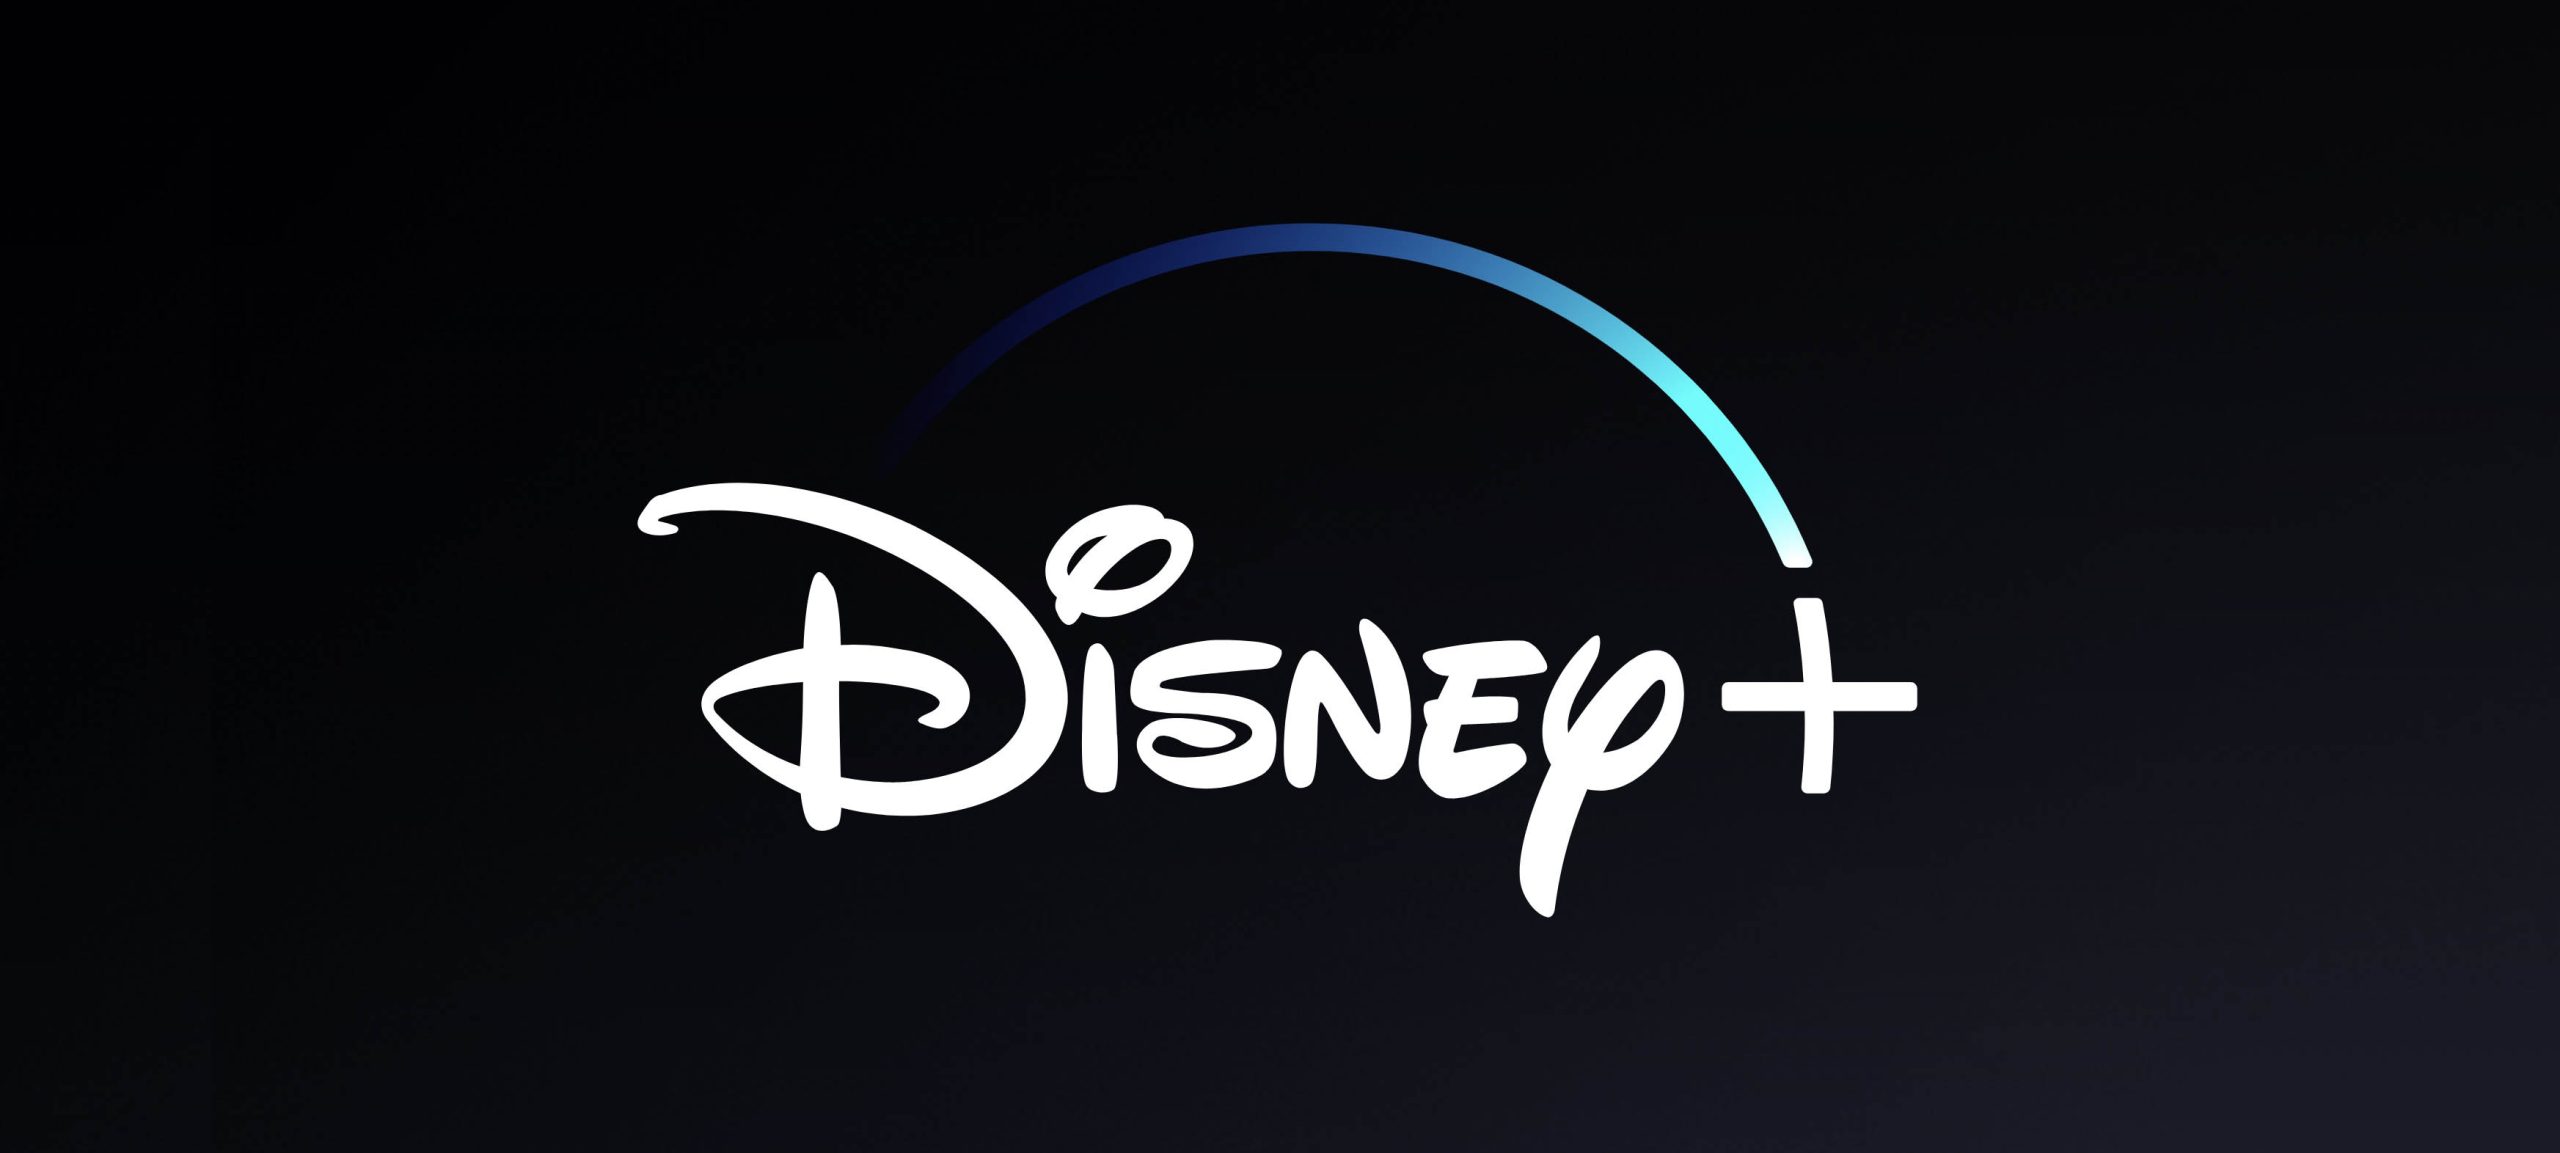 Disney + logo wide